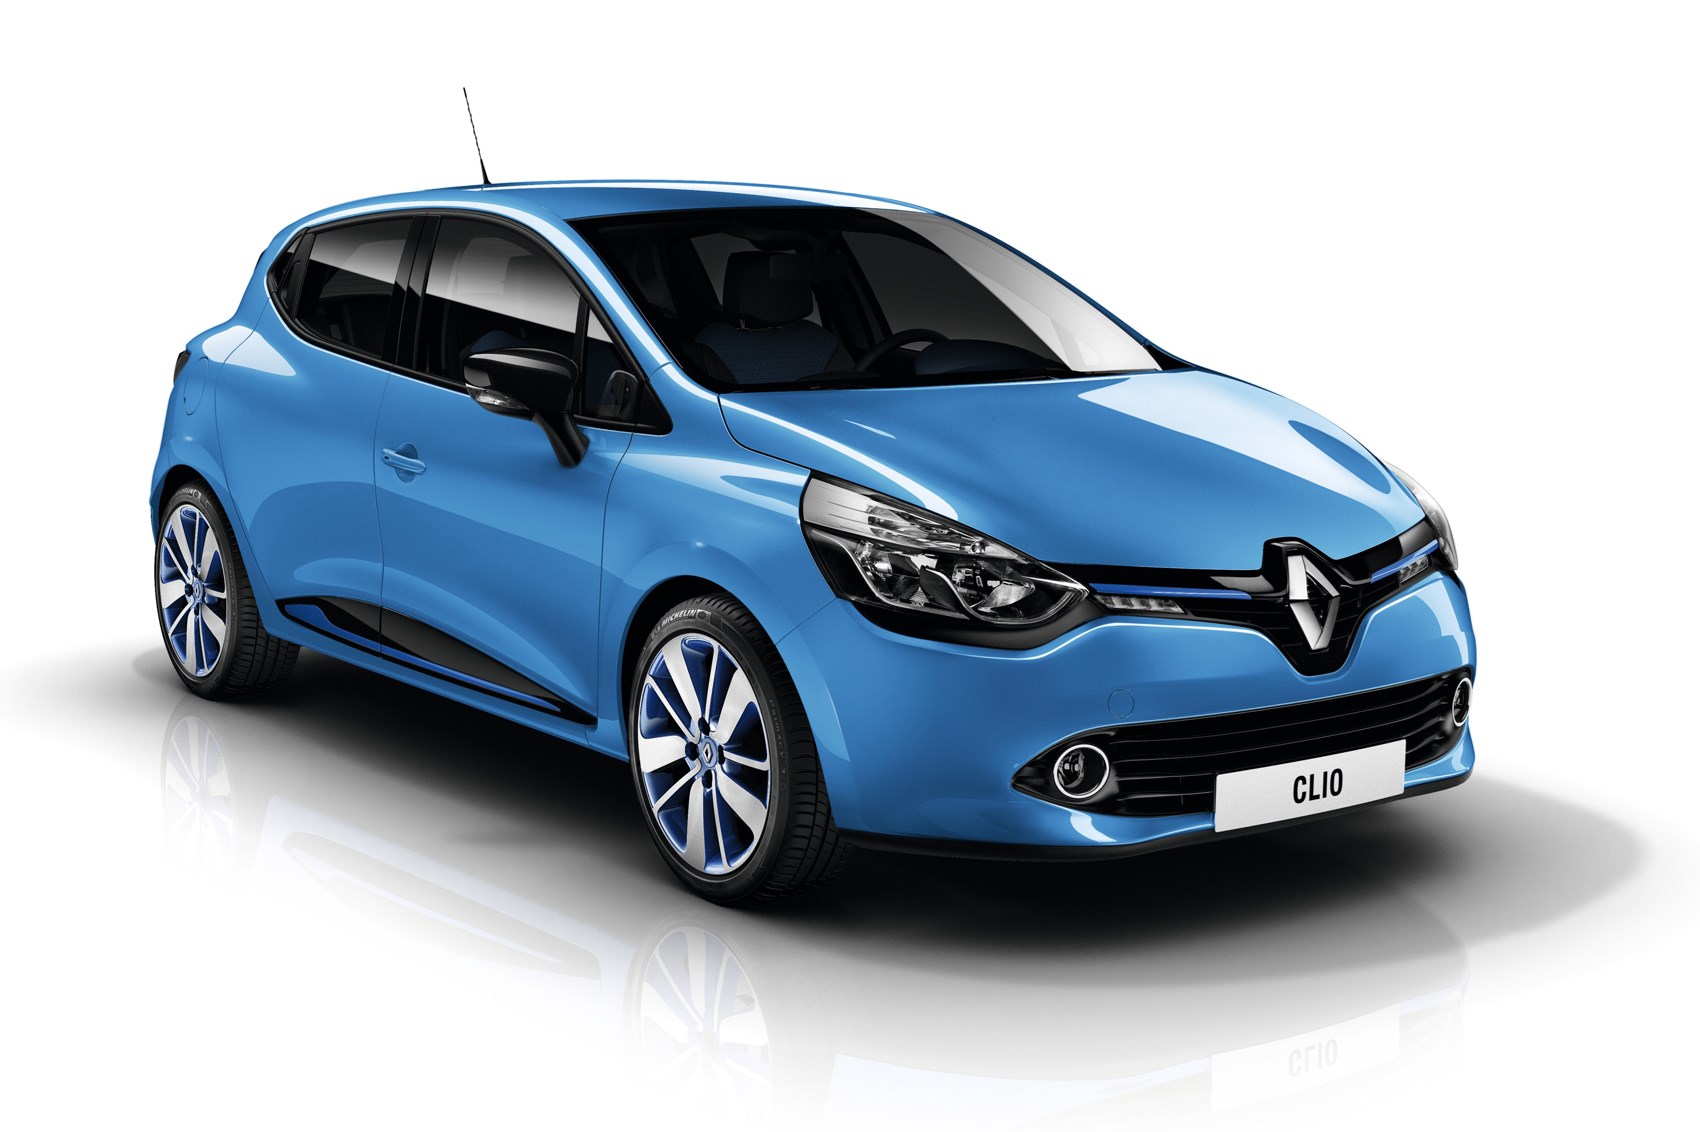 Renault Clio Backgrounds, Compatible - PC, Mobile, Gadgets| 1700x1132 px